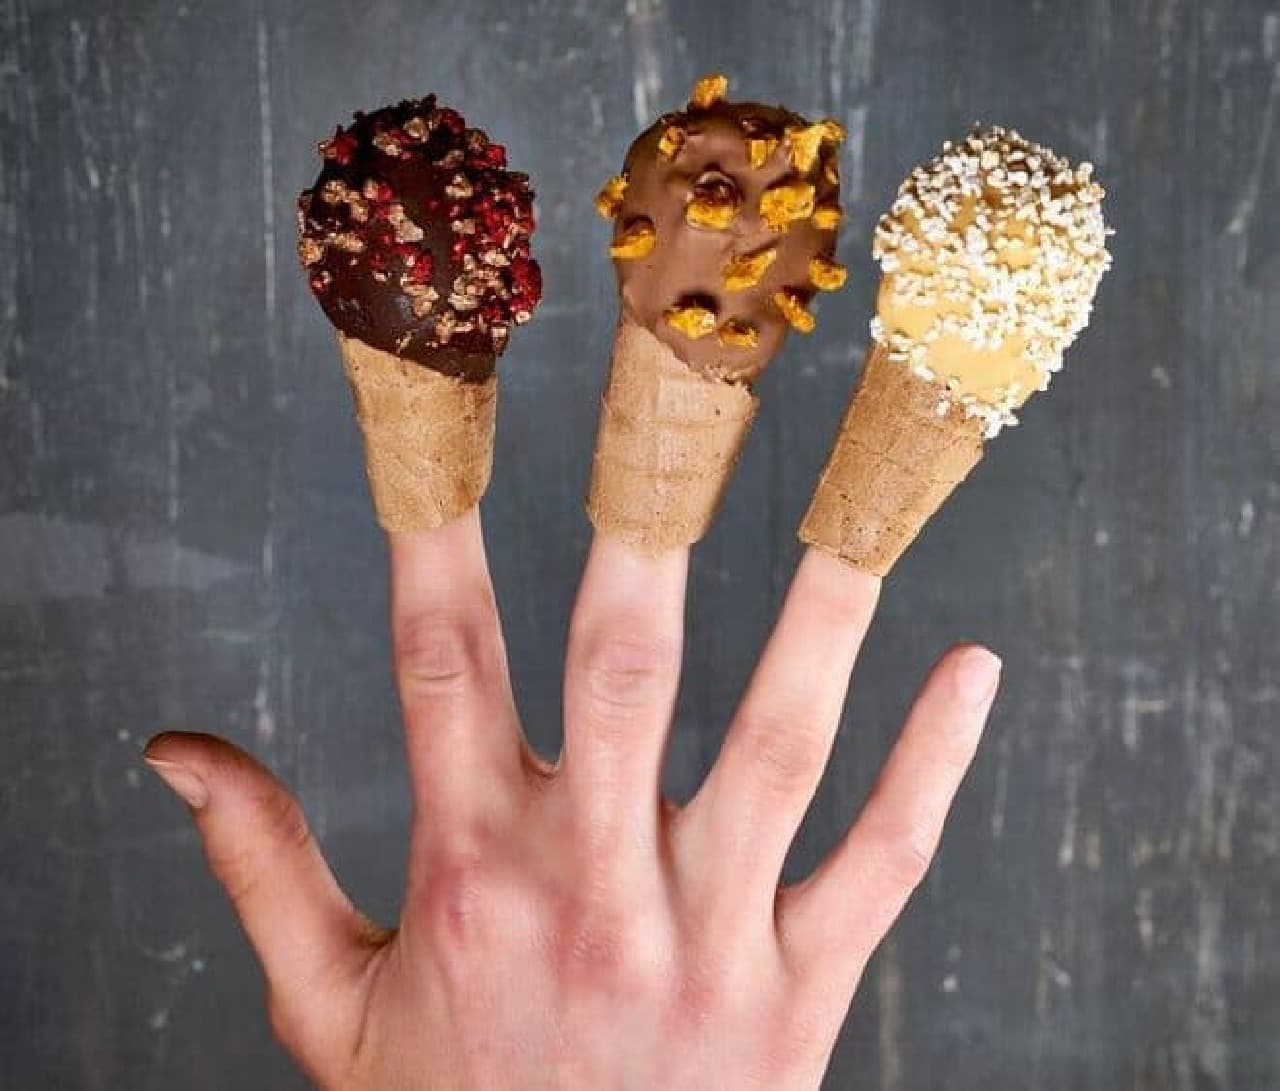 Giapoの新作「指にはめるアイスクリーム」